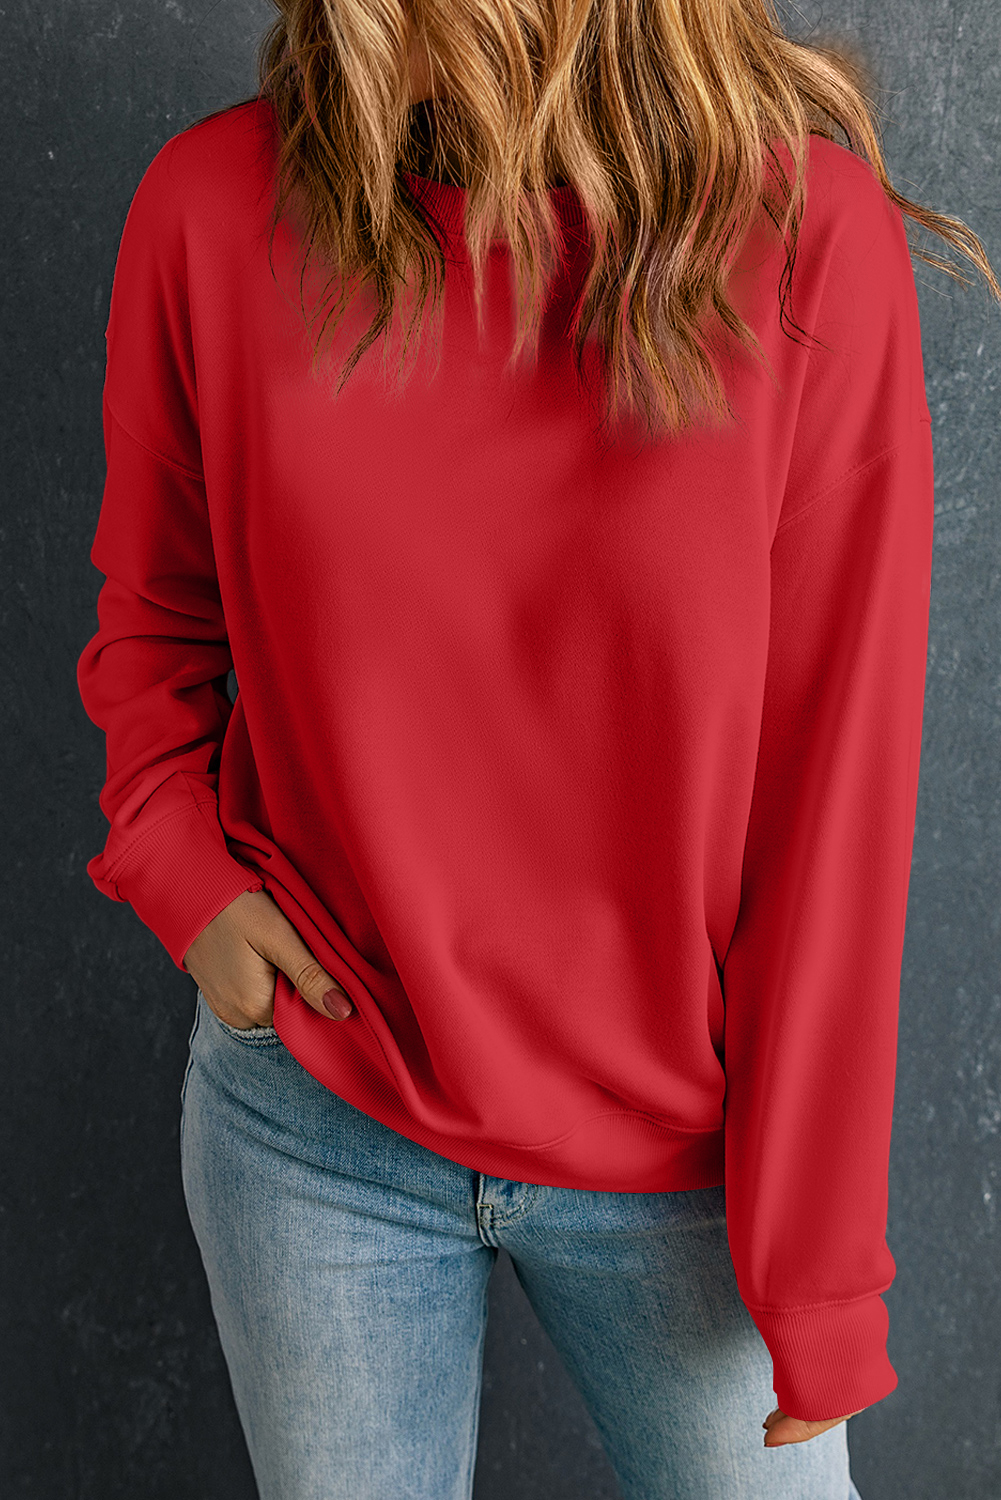 Red Solid Color Classic Crewneck Pullover Sweatshirt